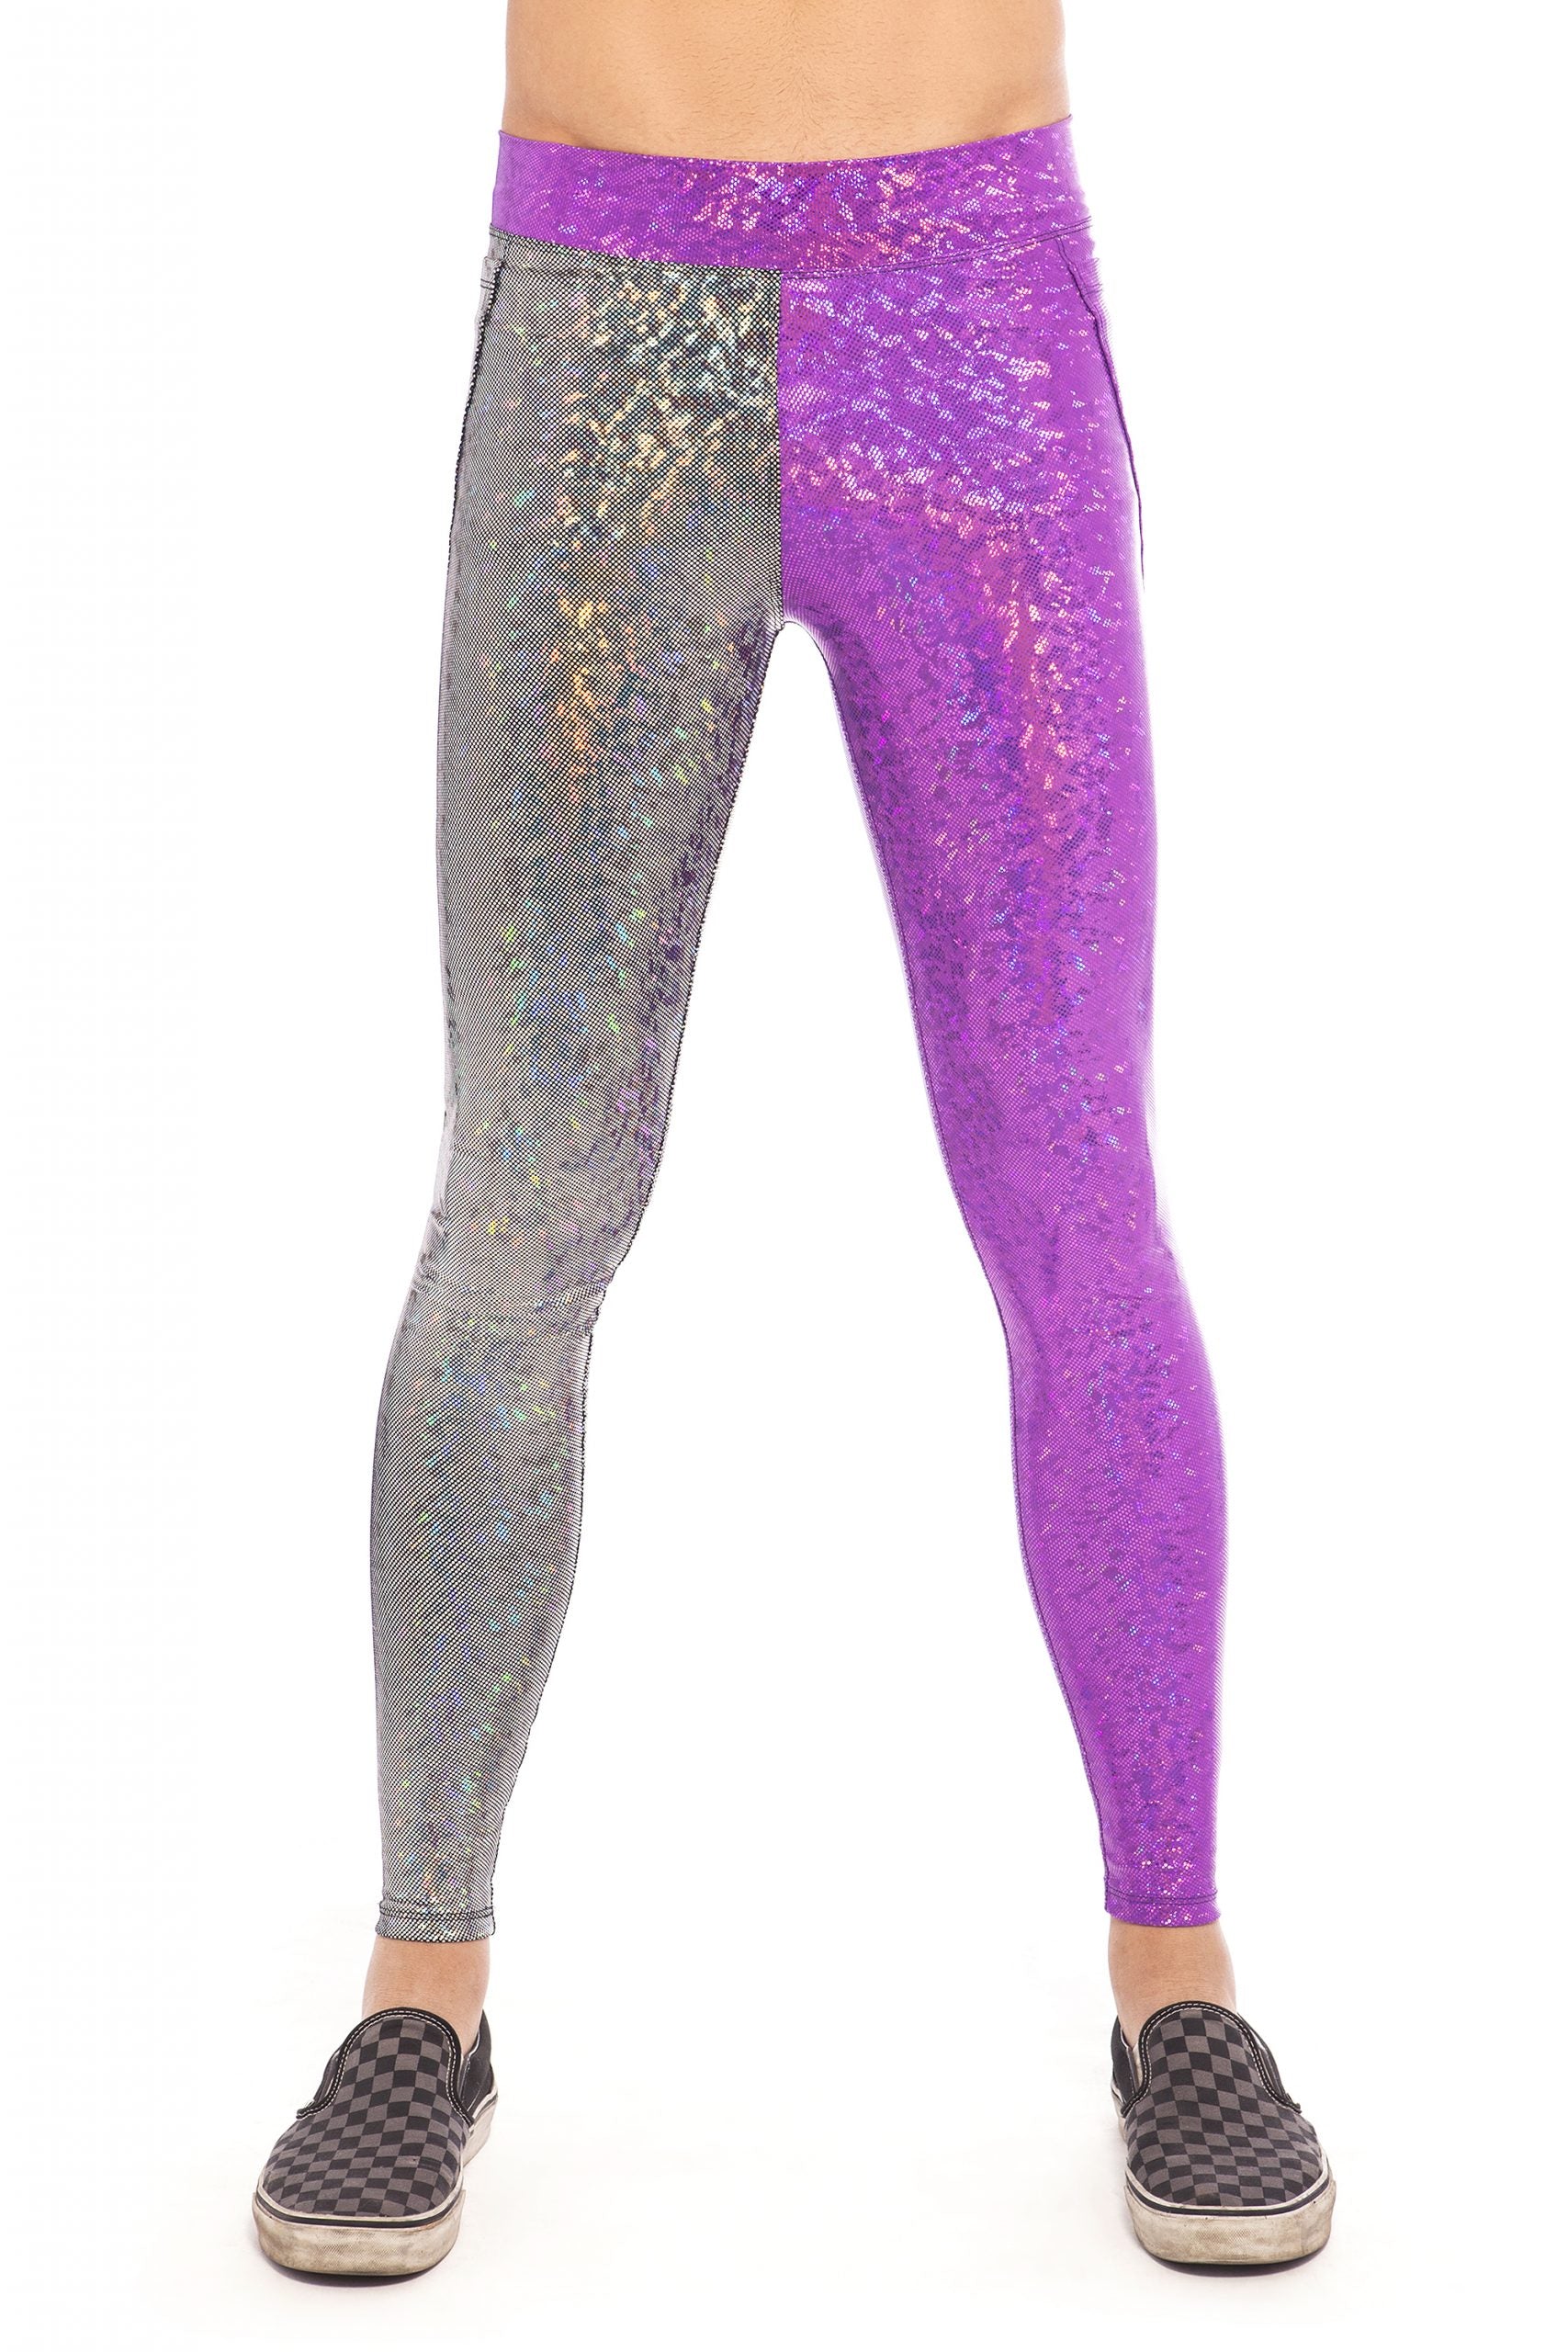 Silver Women's Shinning Skin Fit Readymade Shimmer Shine Leggings By Kanna  Fabric. Size :- XL, XXL